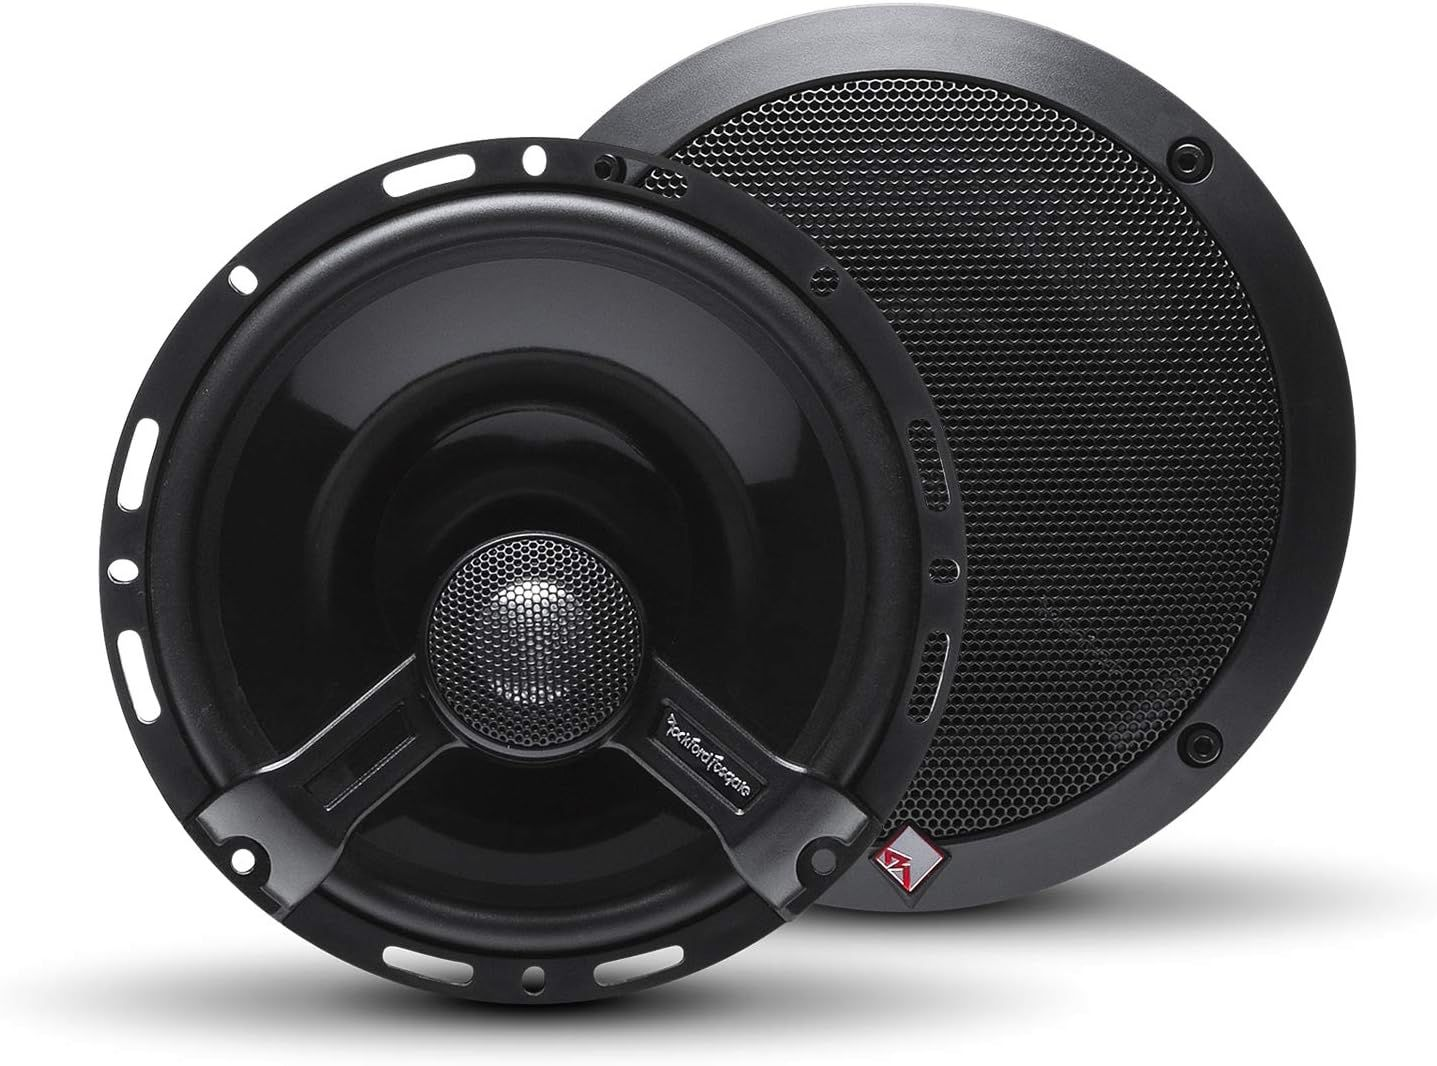 4 Rockford Fosgate Power T1650 300W Peak 6.5" Power Series 2-Way Coaxial Car Speakers